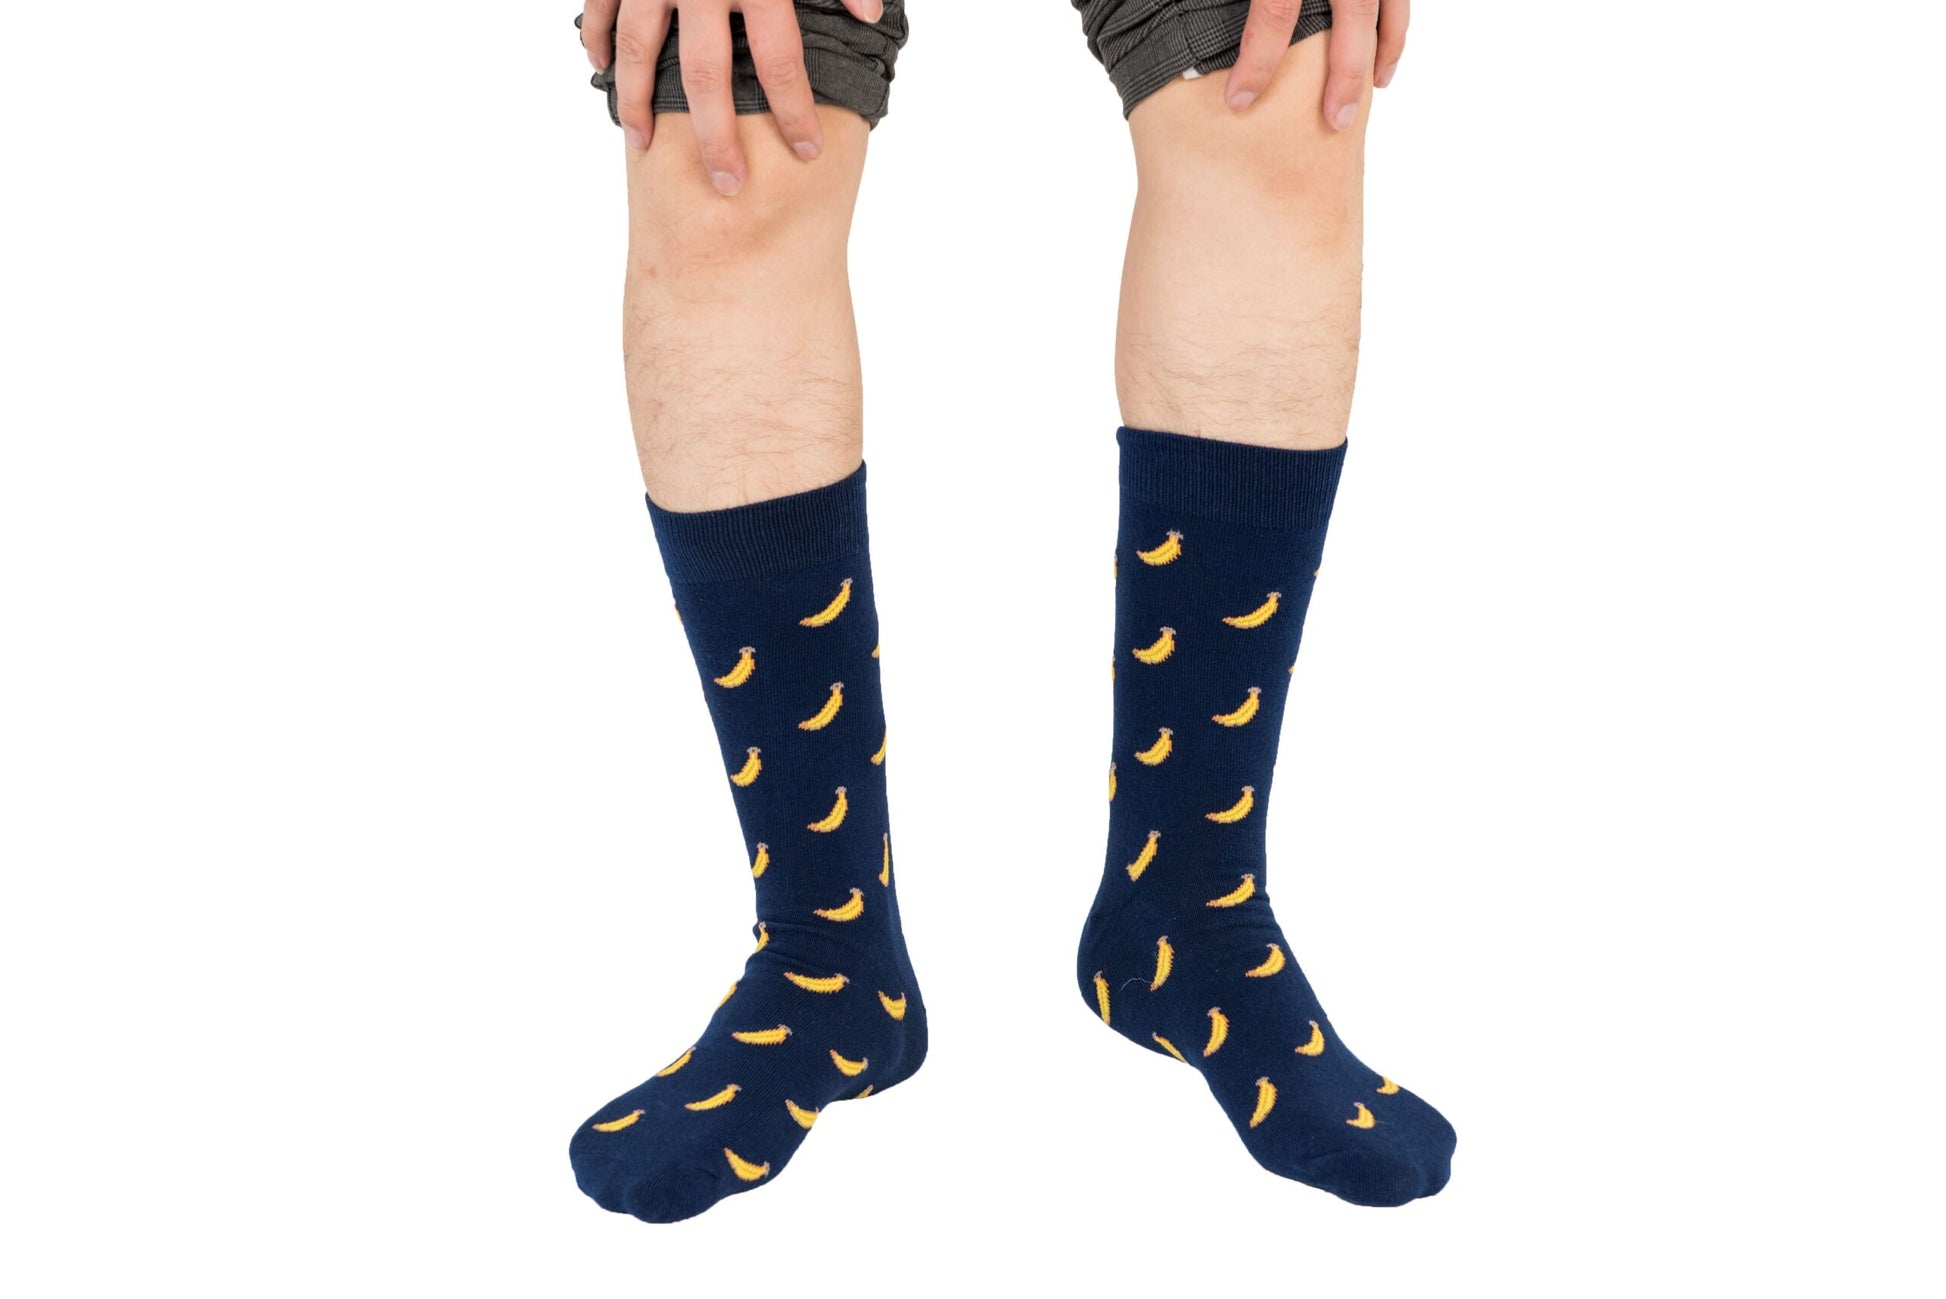 A boy wearing a pair of Banana Socks.